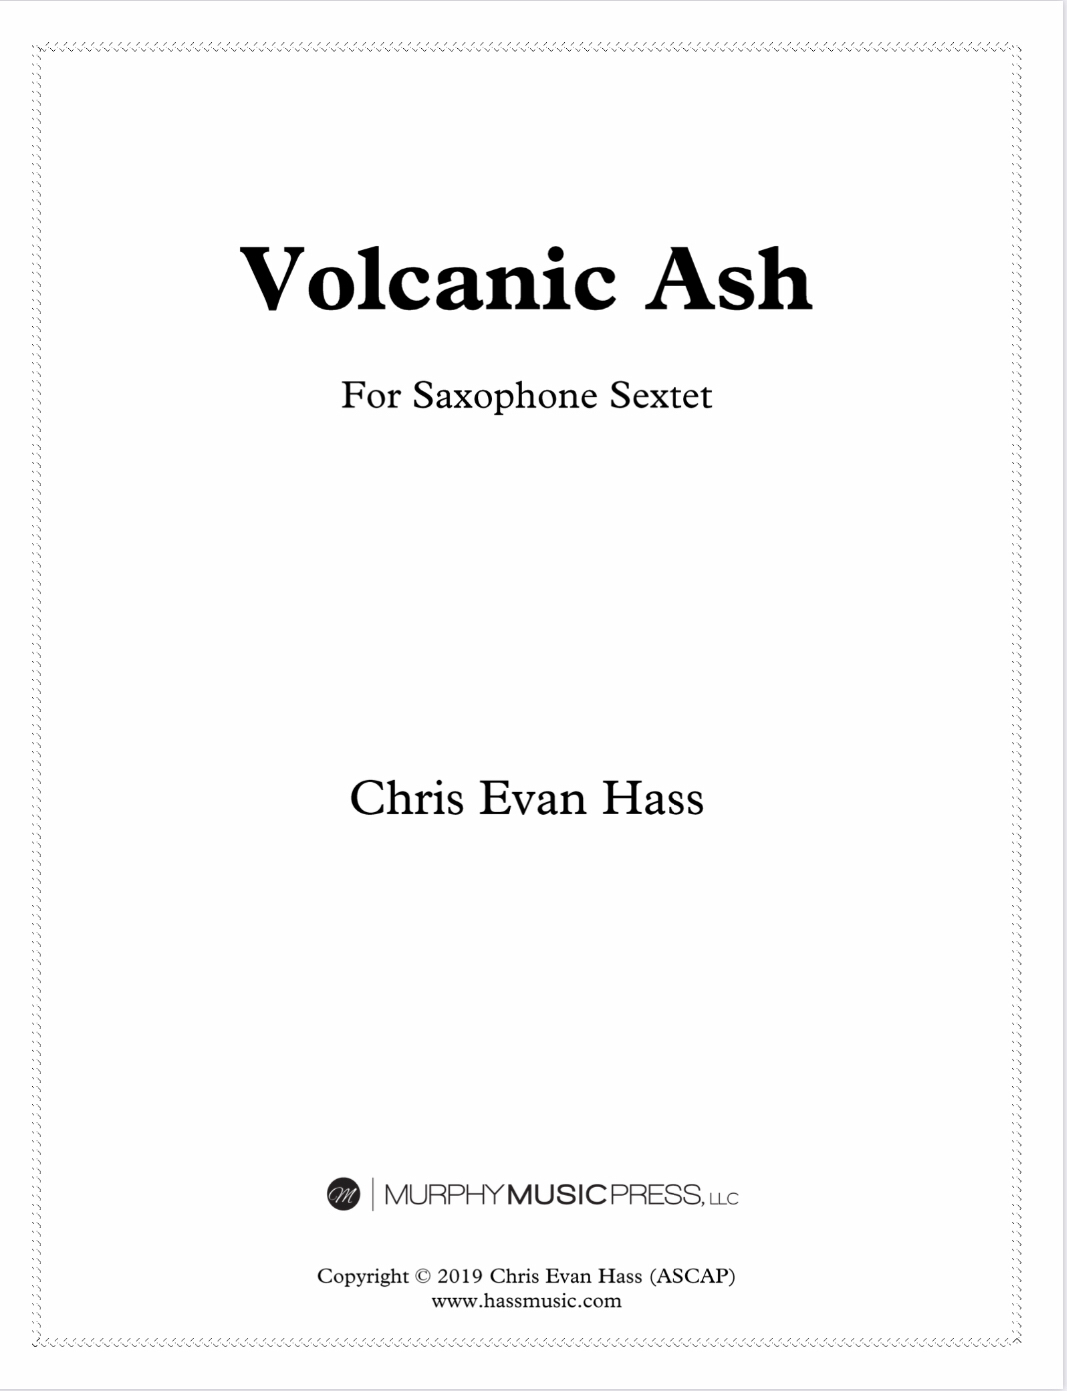 Volcanic Ash (Saxophone Ensemble Version) by Chris Evan Hass